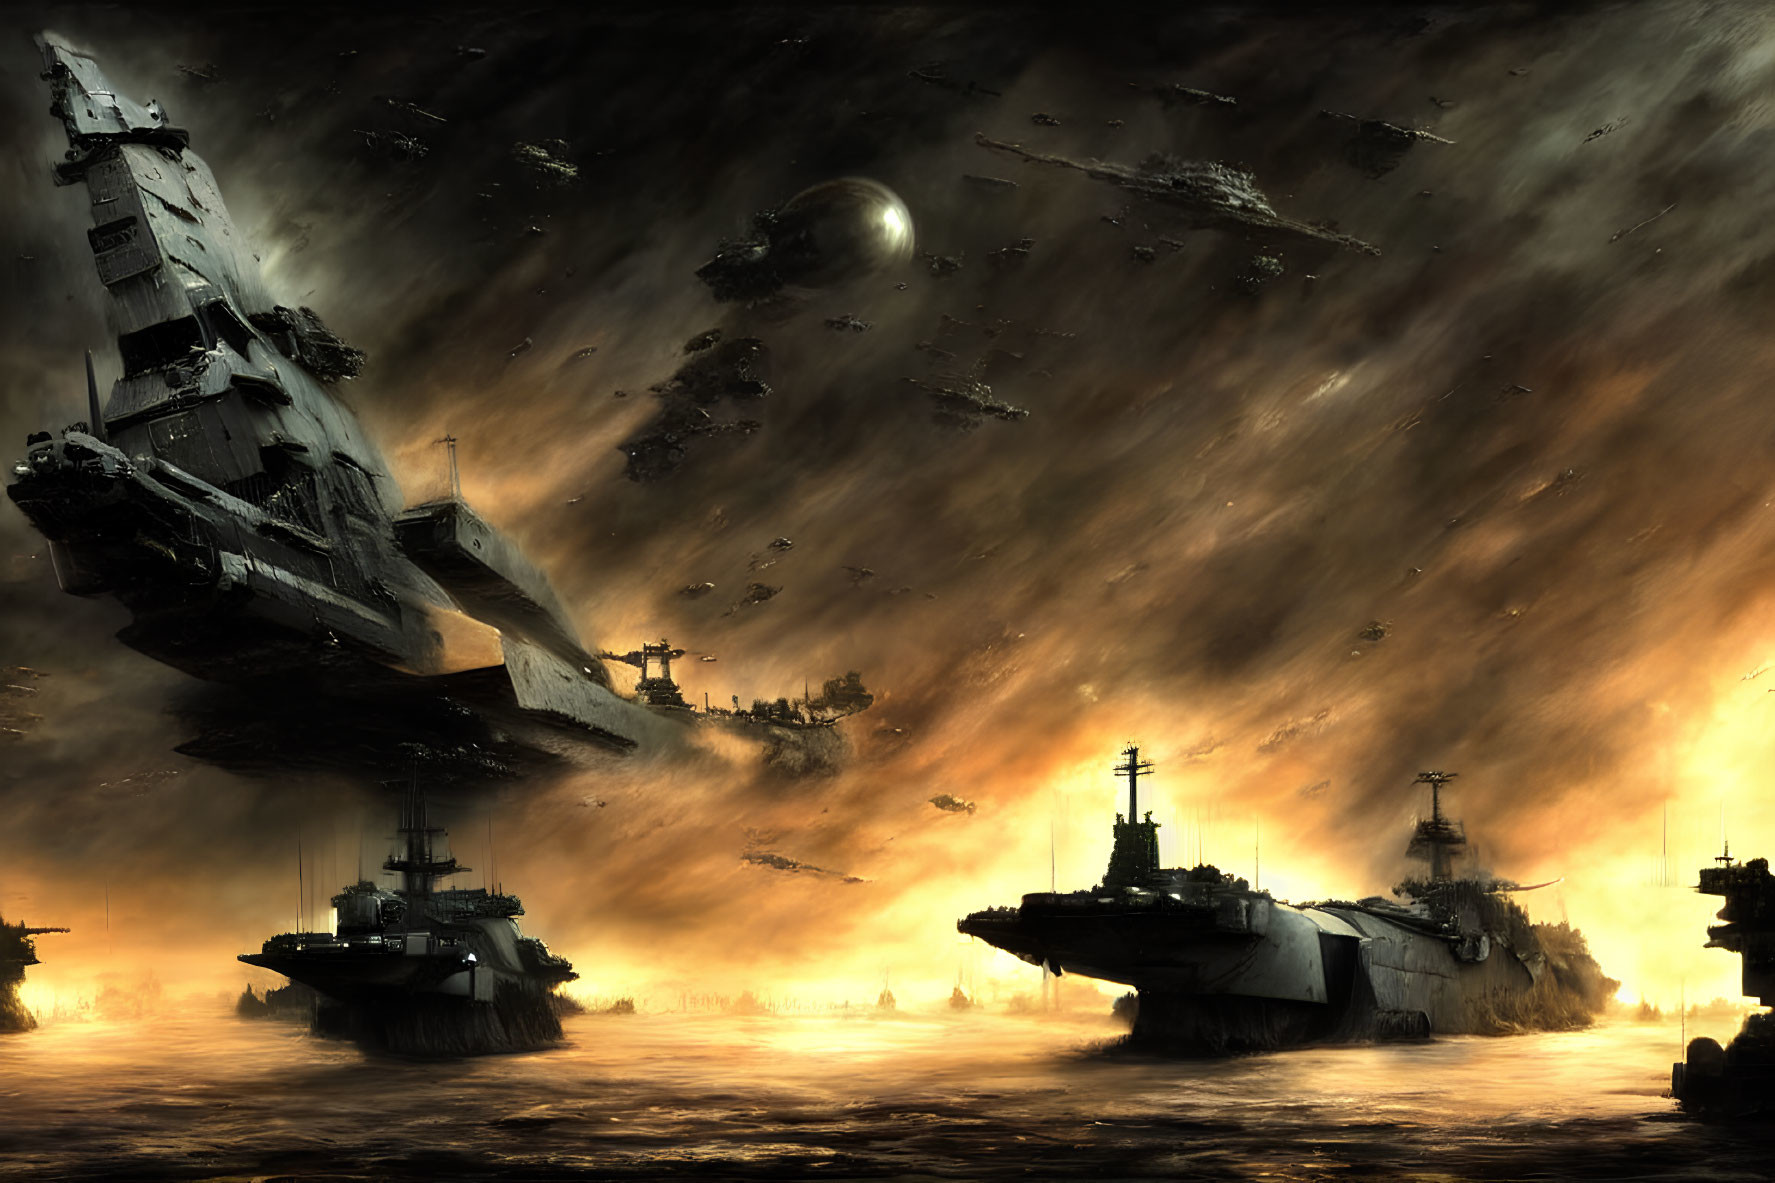 Sci-fi scene: Battleships in stormy sky with explosions & celestial body